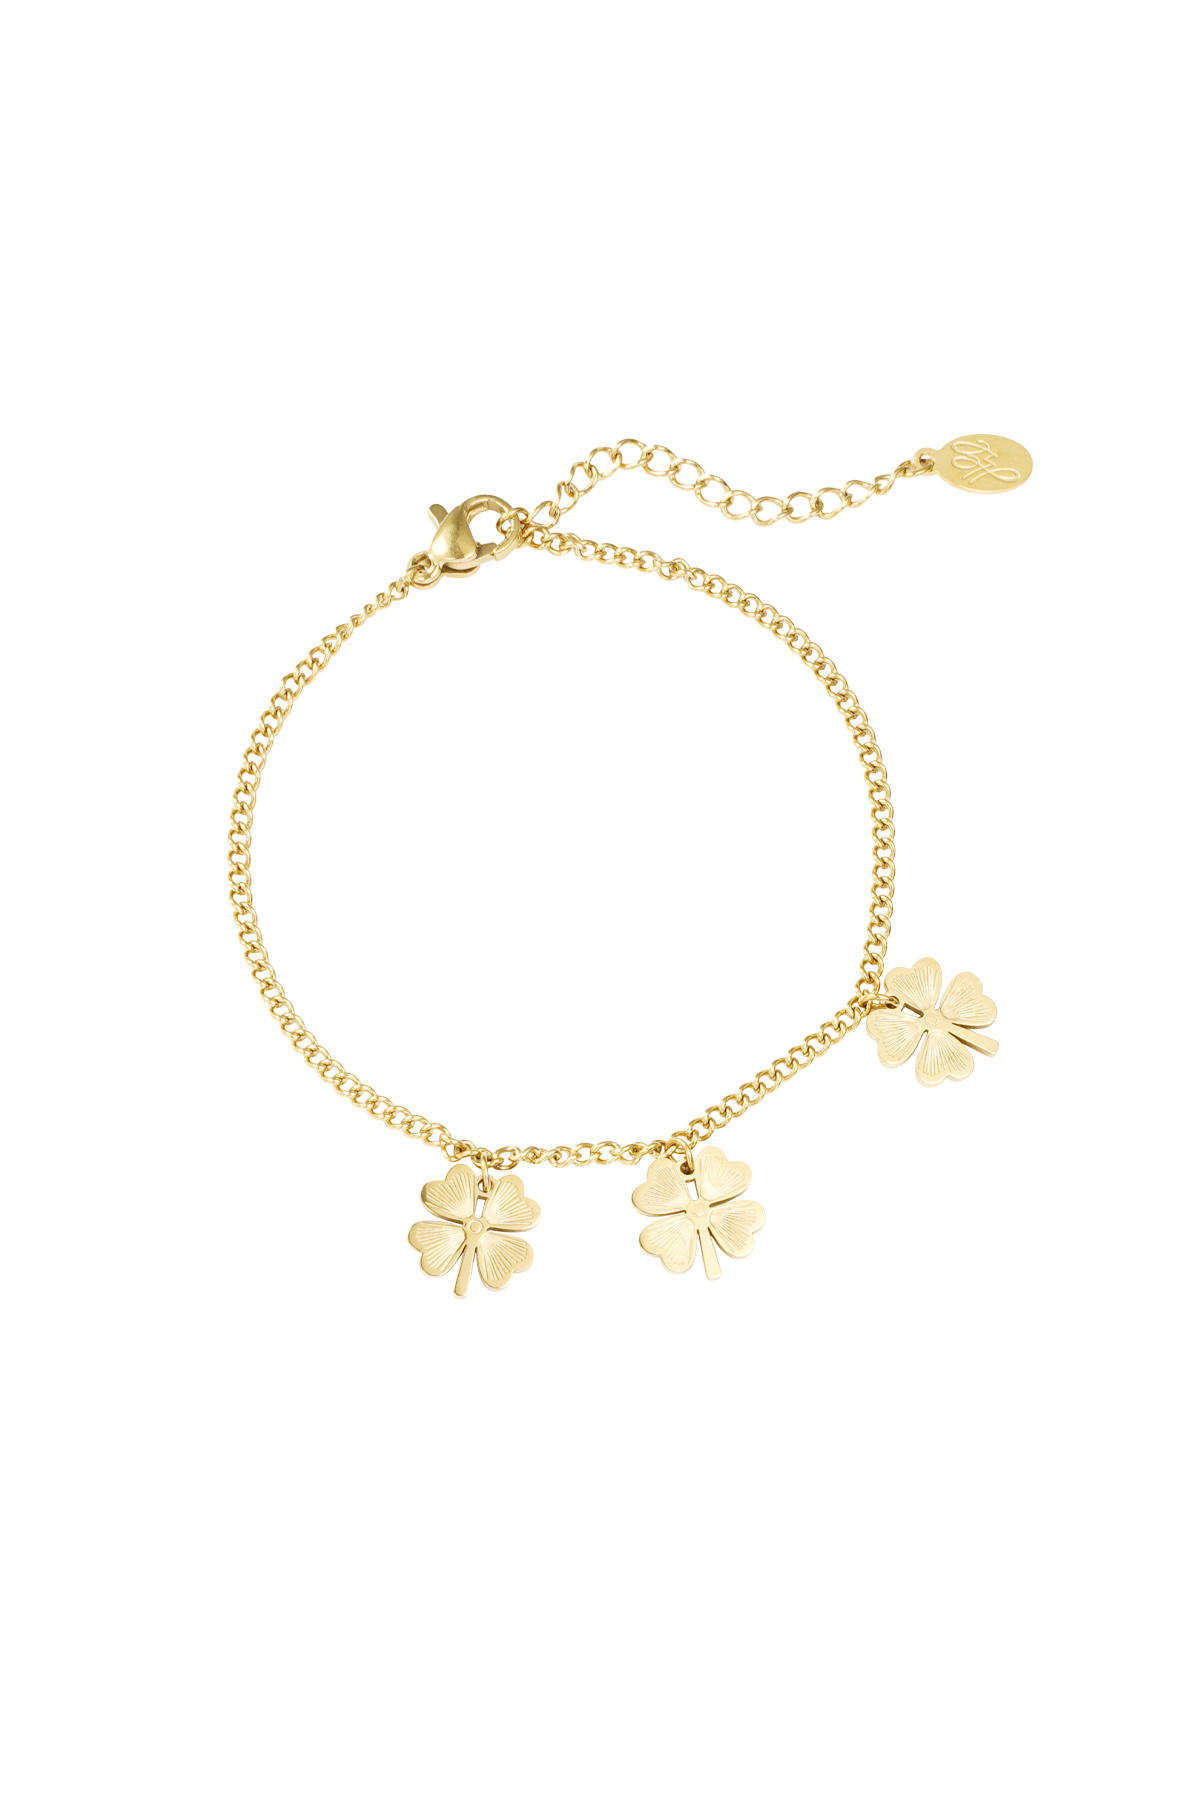 Bracelet clovers - gold